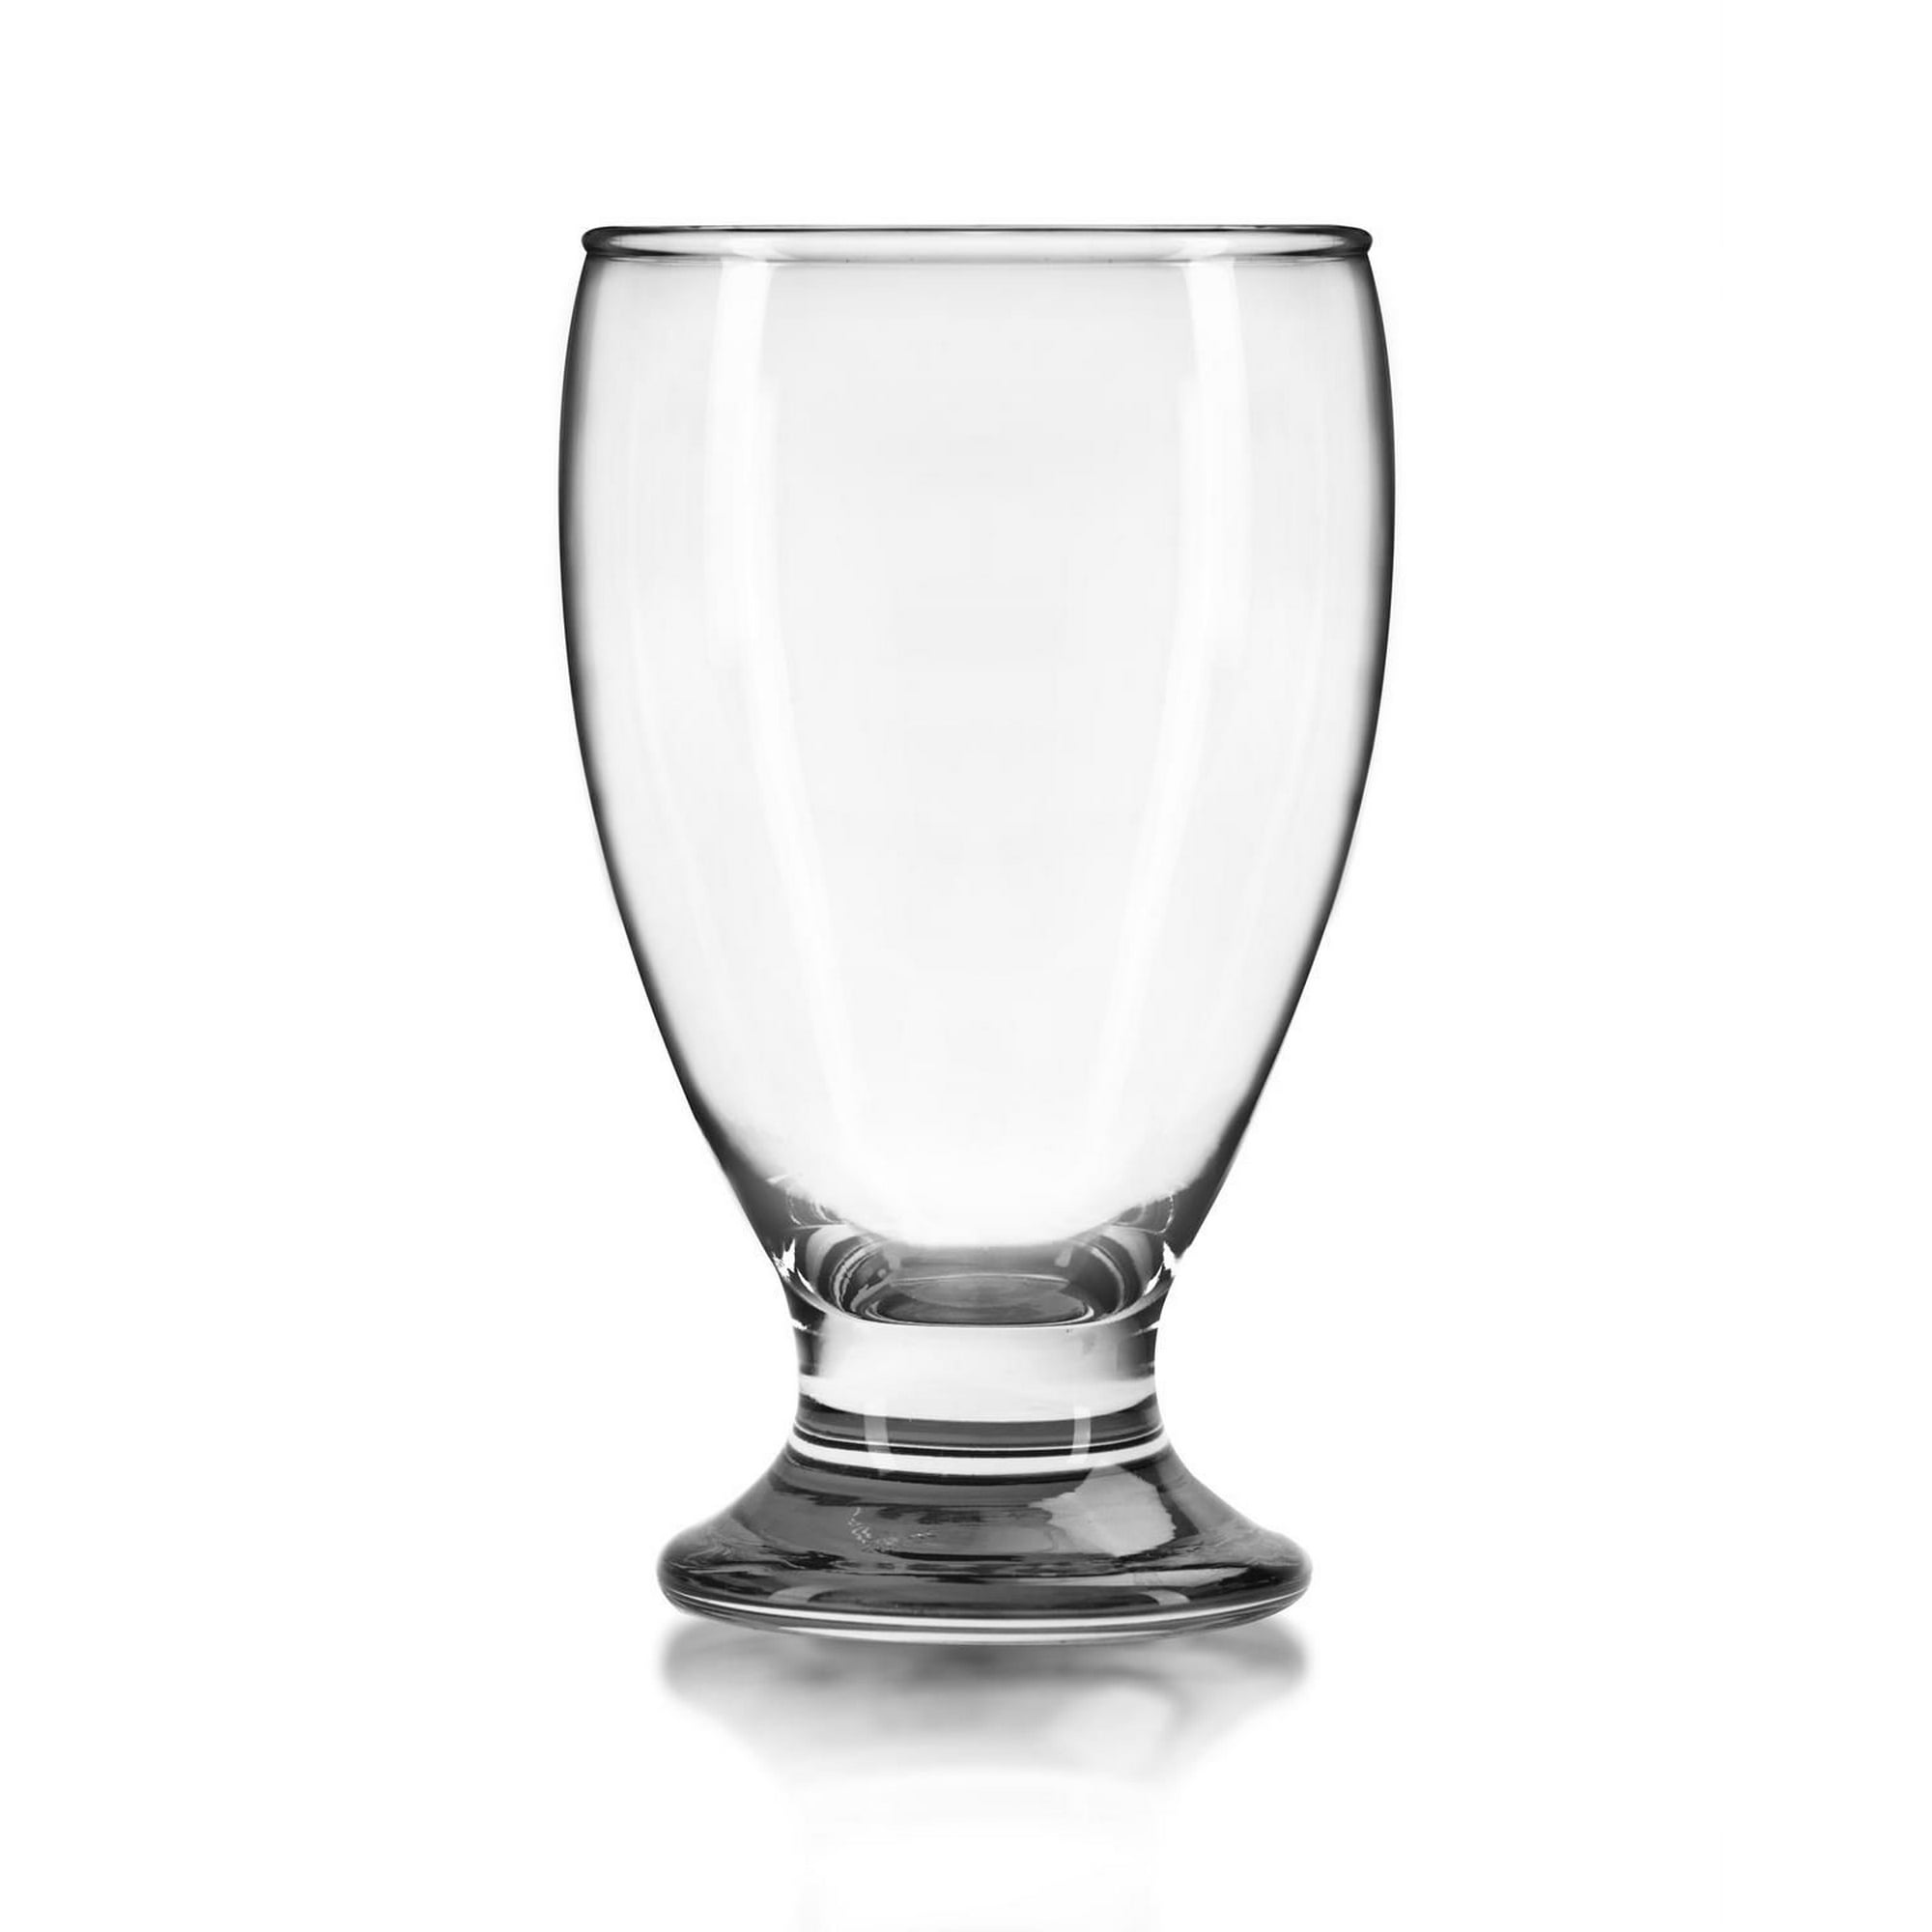 Glass Goblet, 10.7 oz capacity